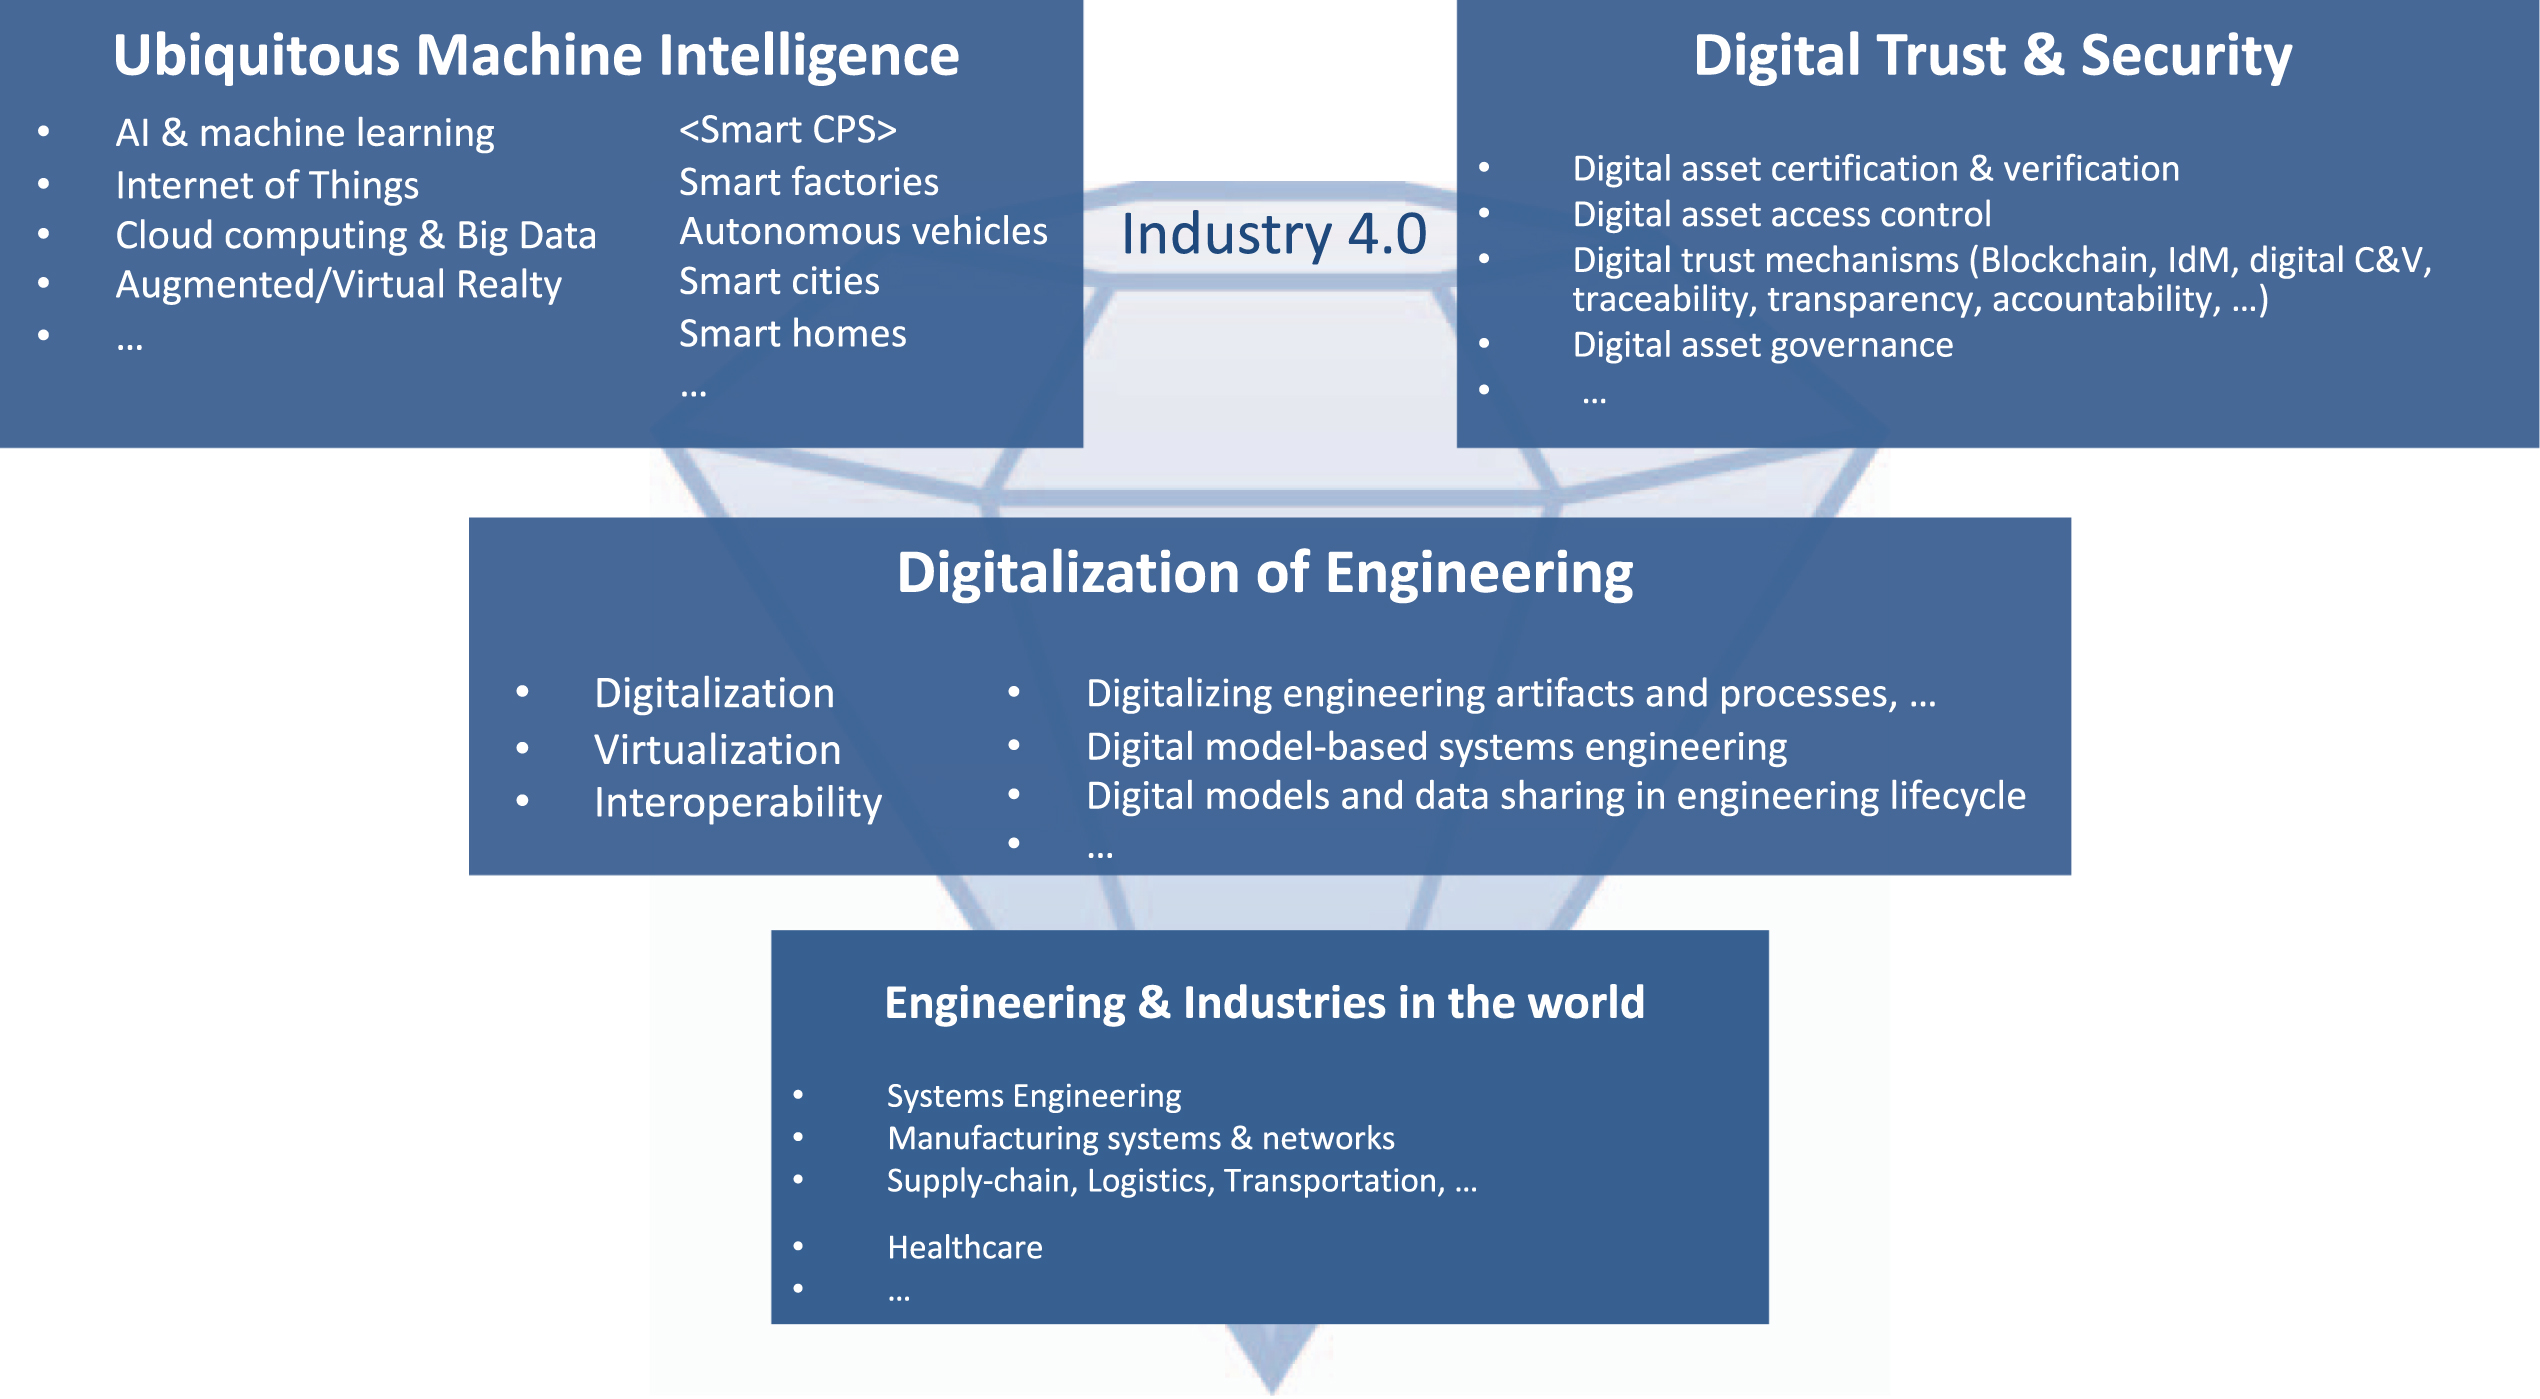 Three essential building blocks for digital engineering towards Industry 4.0: digitalization of engineering, leveraging ubiquitous machine intelligence, and building digital trust & security.